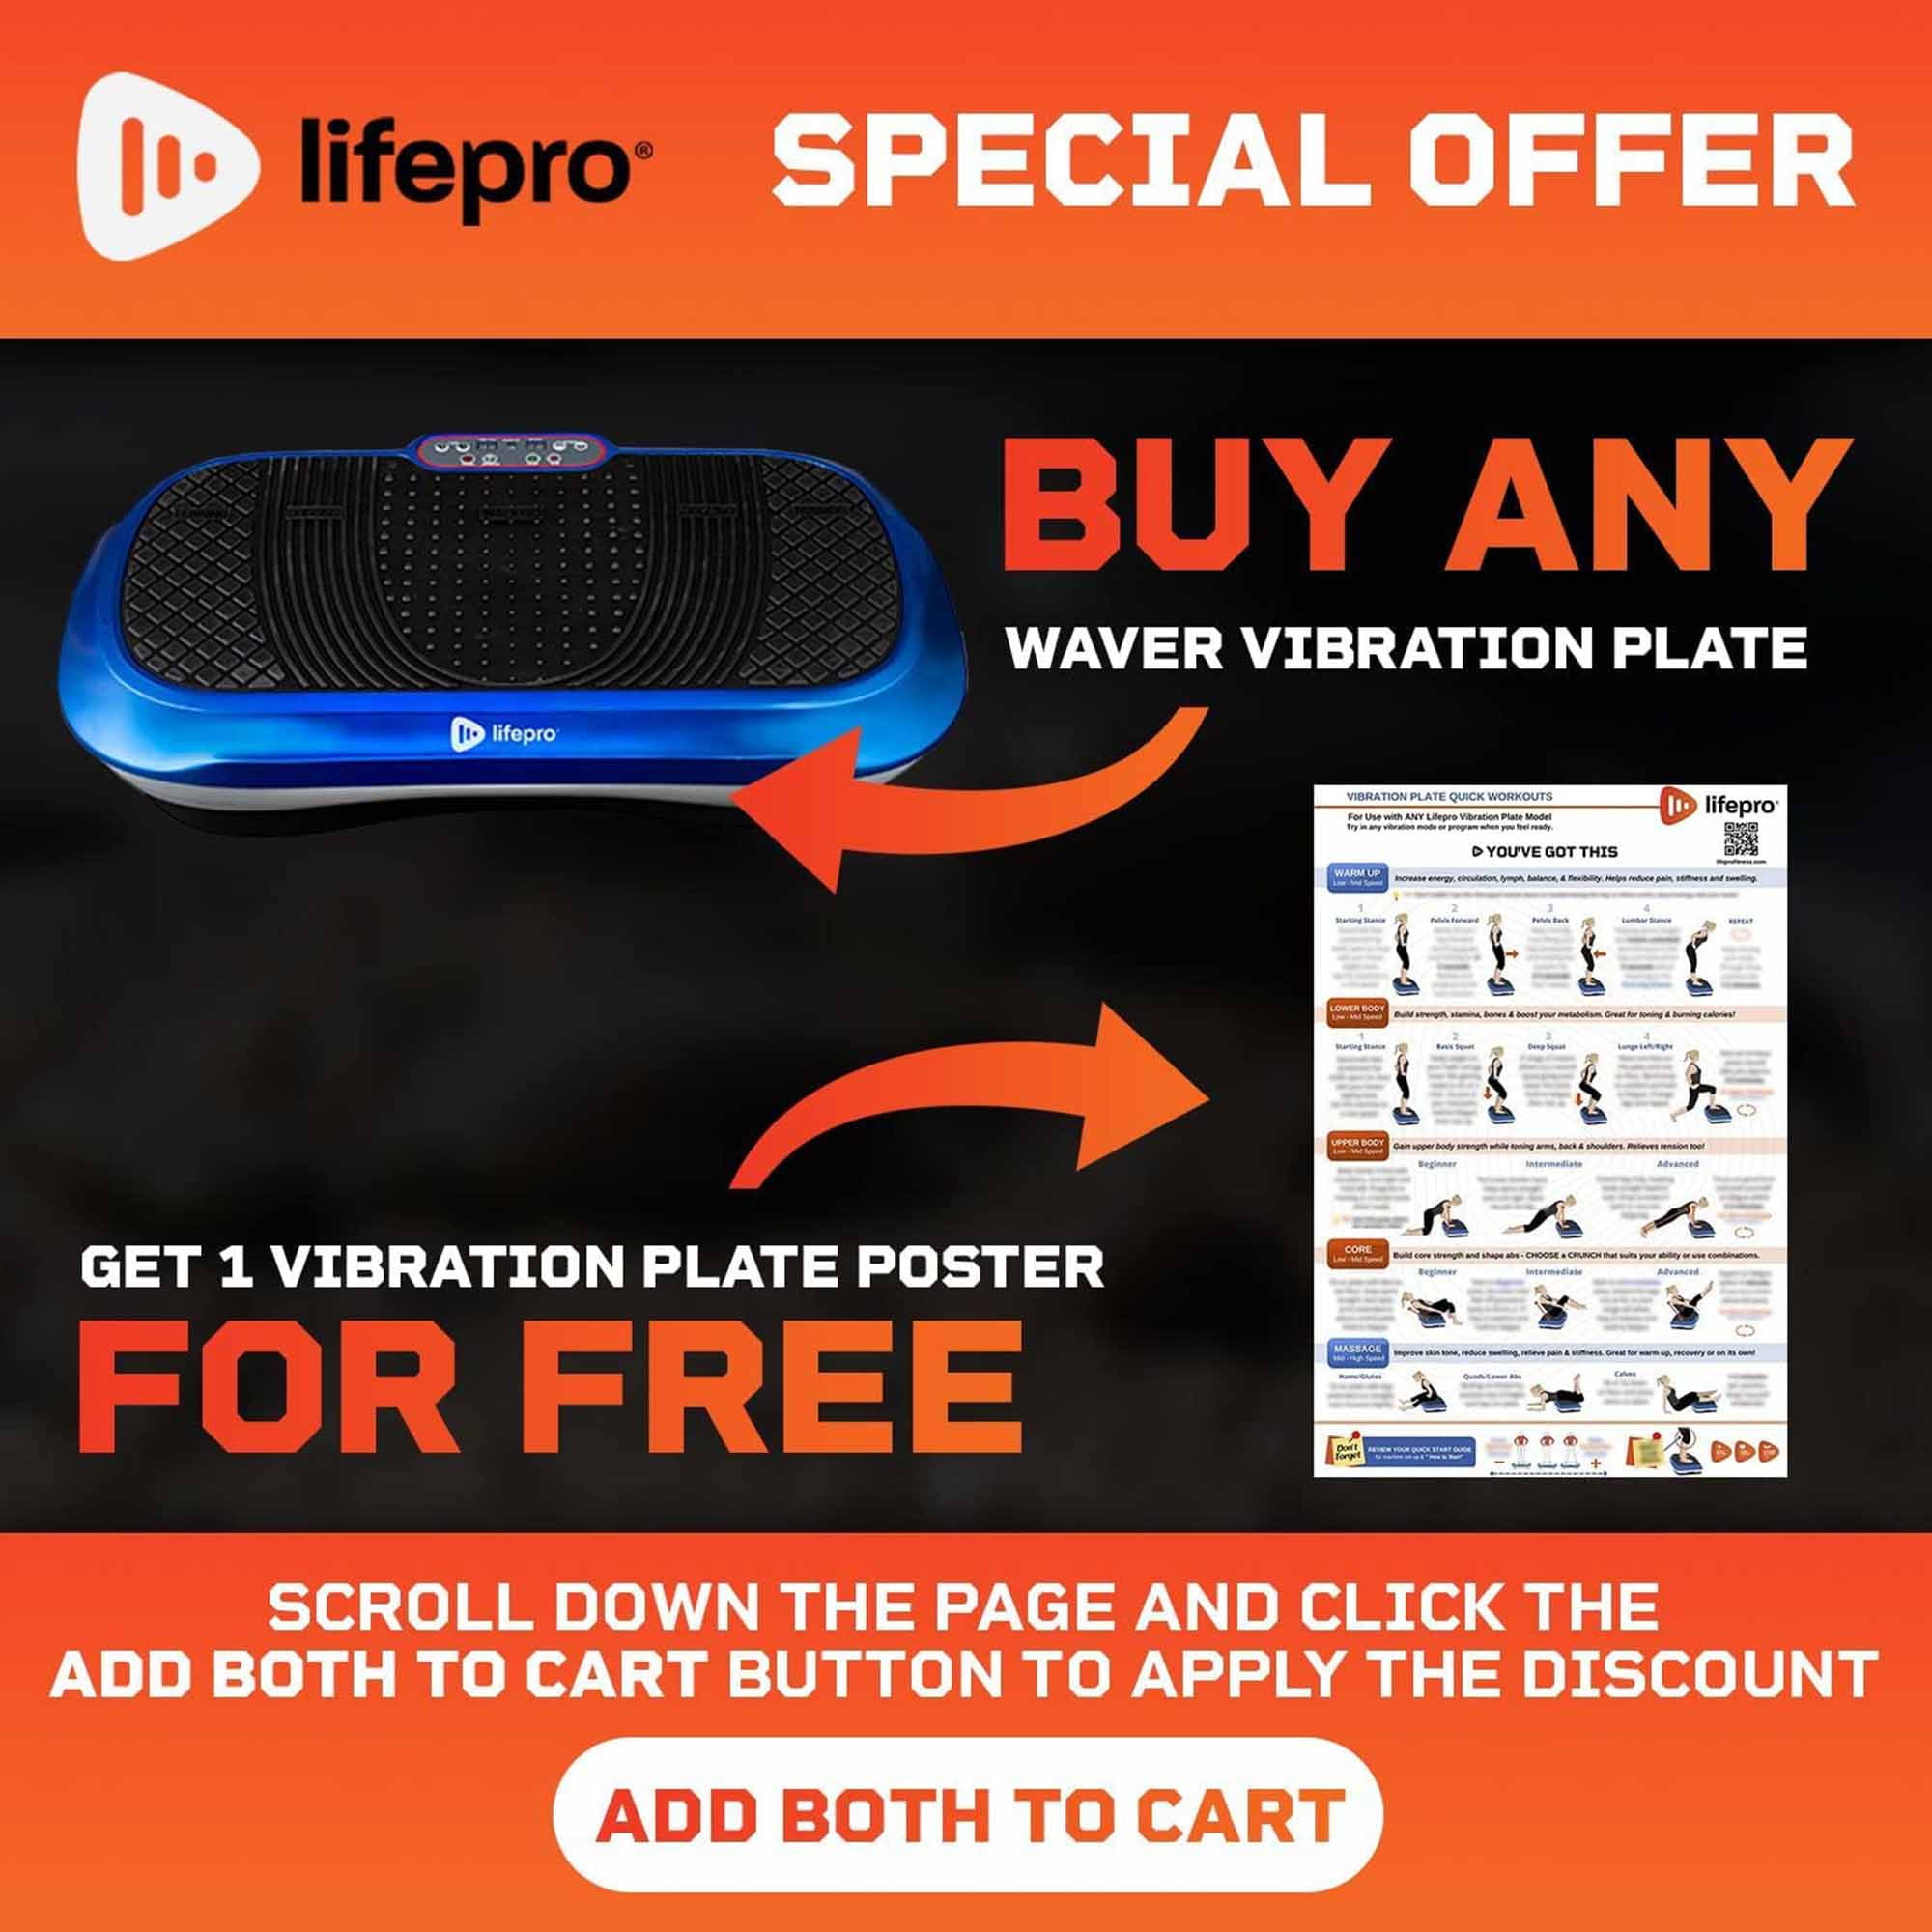 Lifepro Waver Vibration Plate